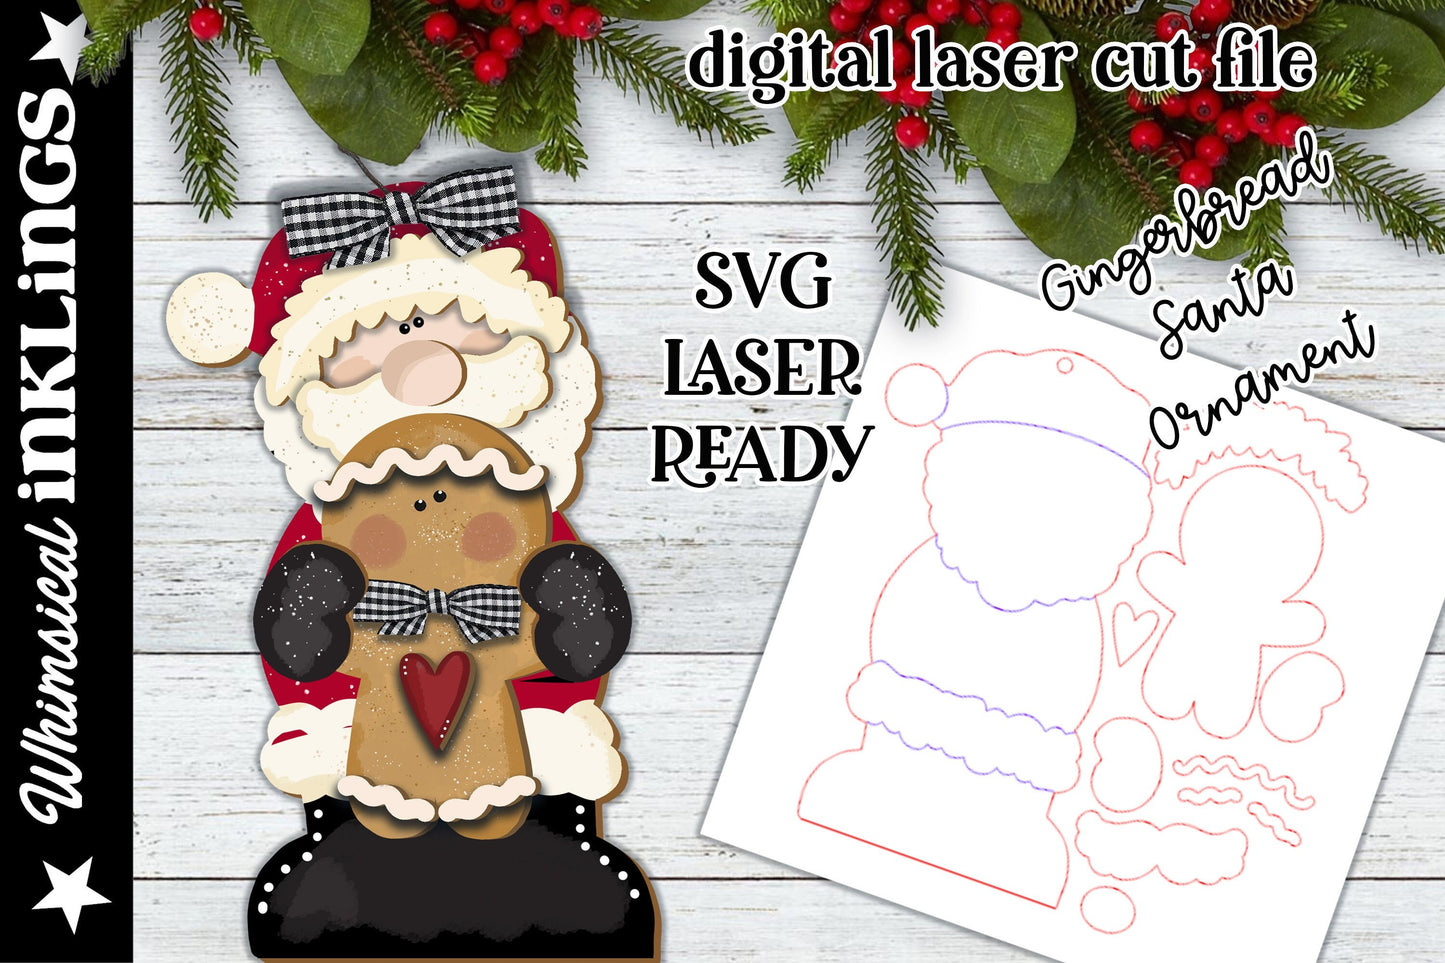 Gingerbread Santa Ornament SVG| Santa Claus SVG| Laser Cut Snowman Ornament| Glow forge| Ornament SVG